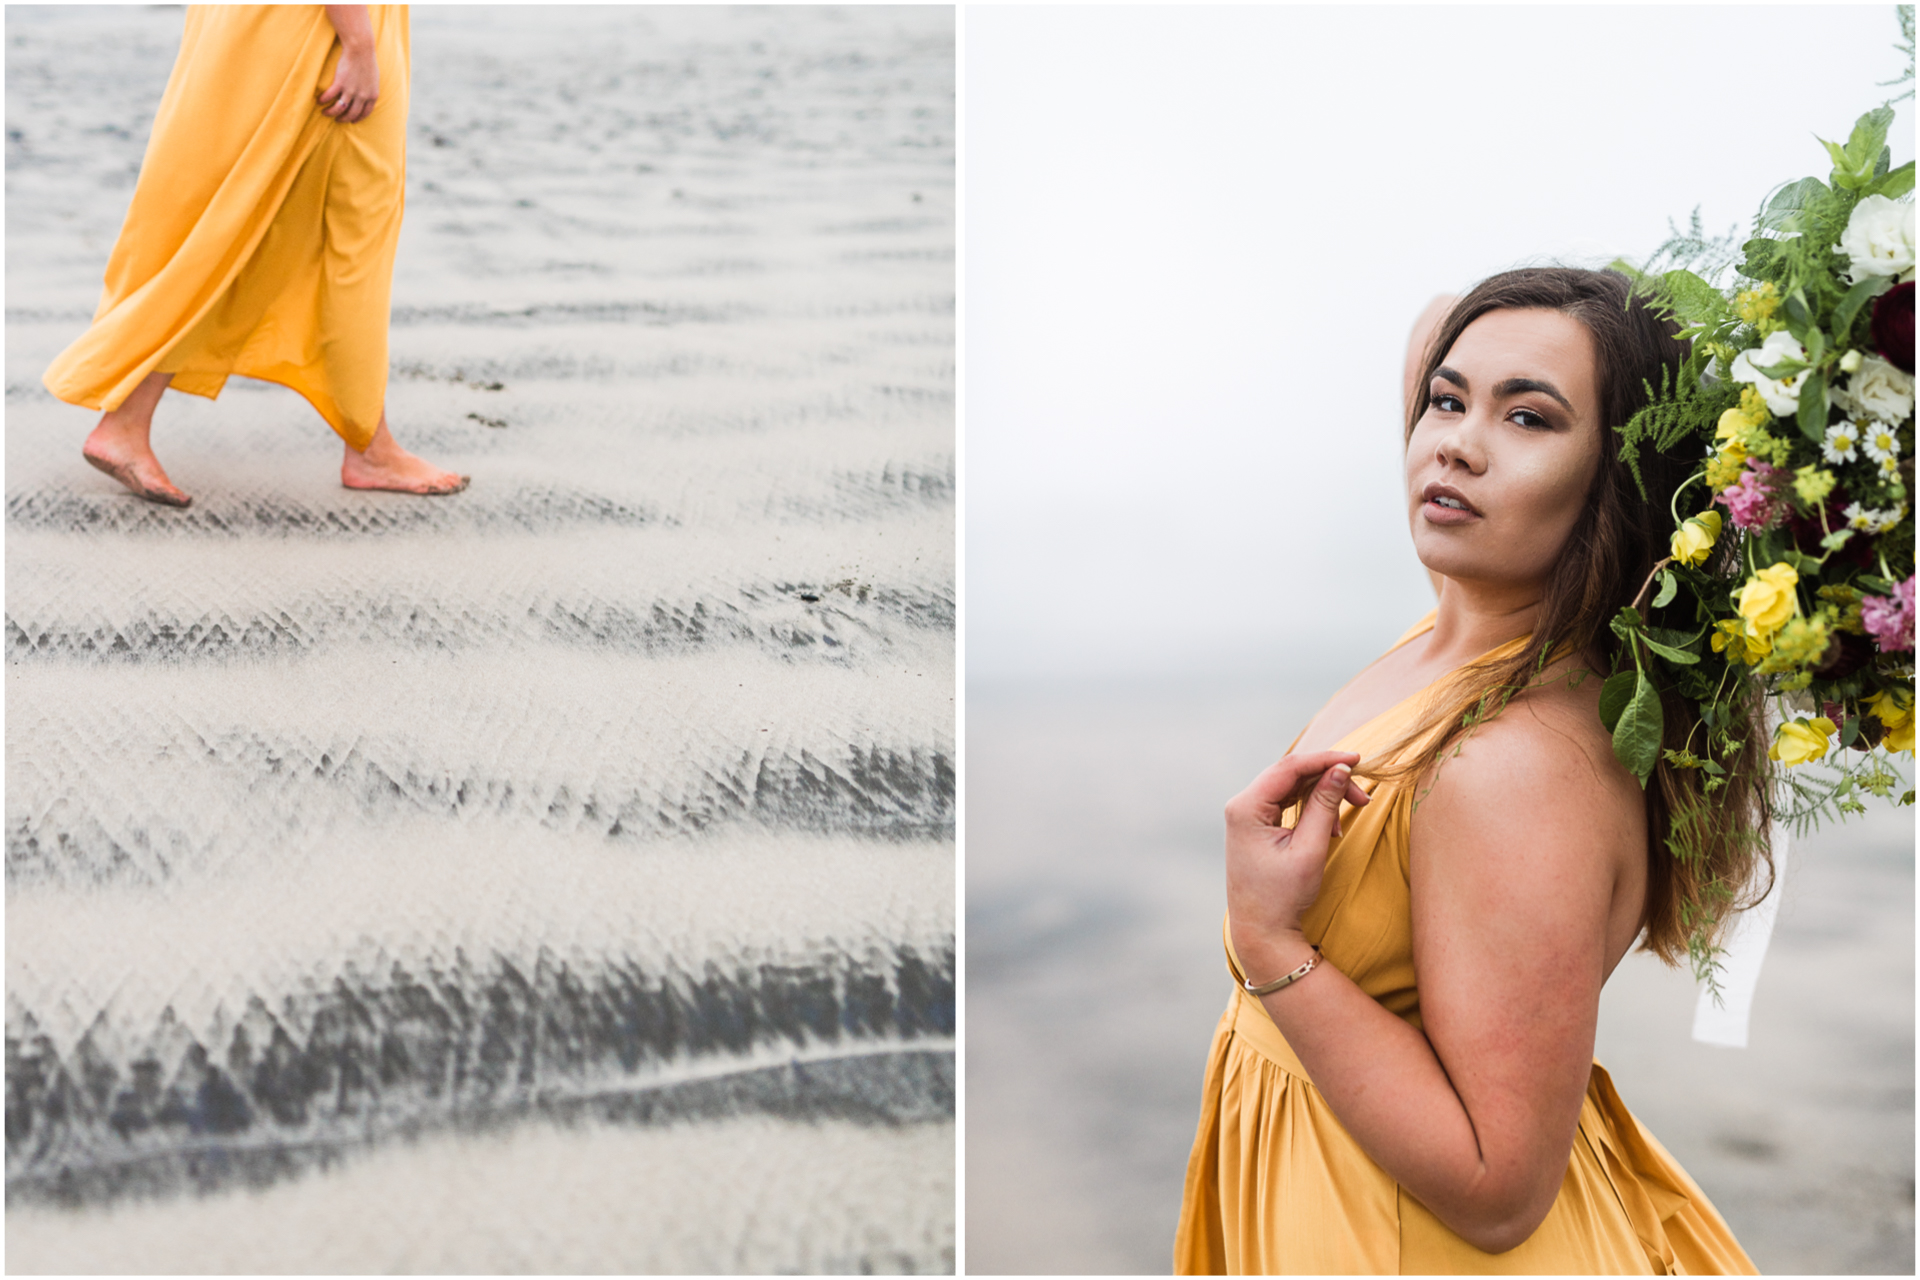 zebra beach sand - portrait of girl in yellow dress walking along the beach